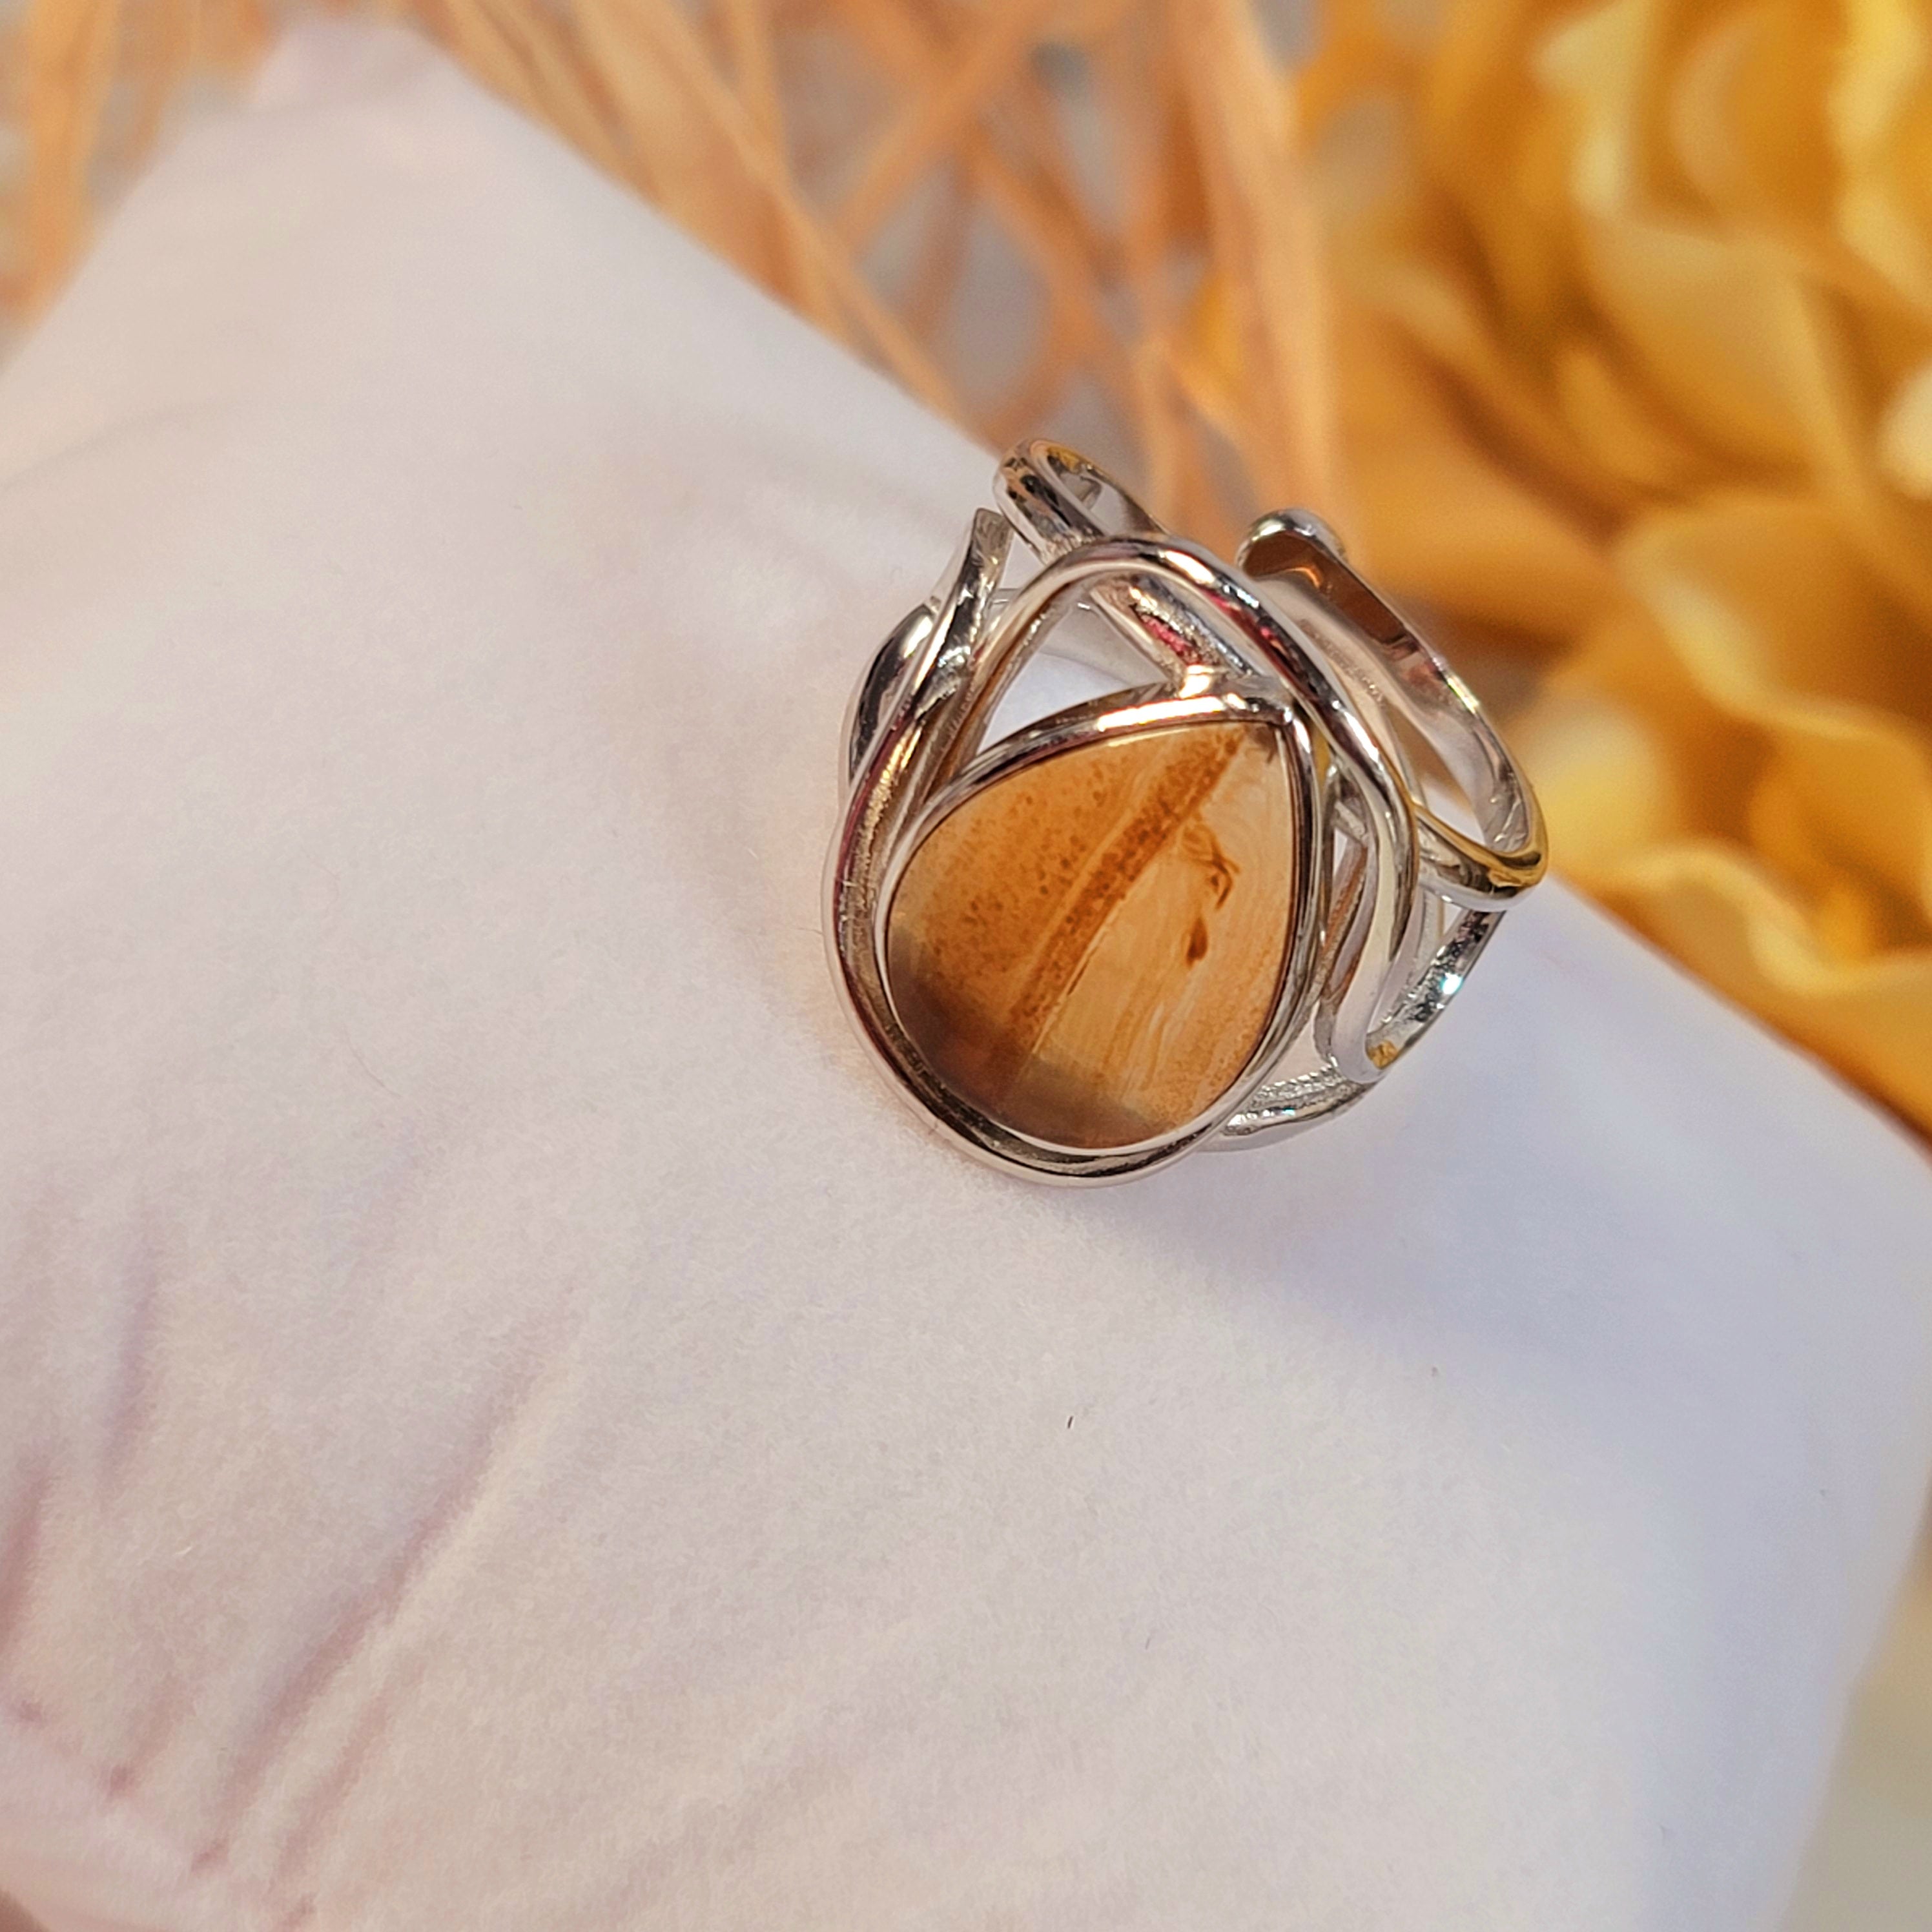 Amber Finger Cuff Adjustable Ring .925 Silver for Manifesting Abundance, Optimism & Purification of Energy